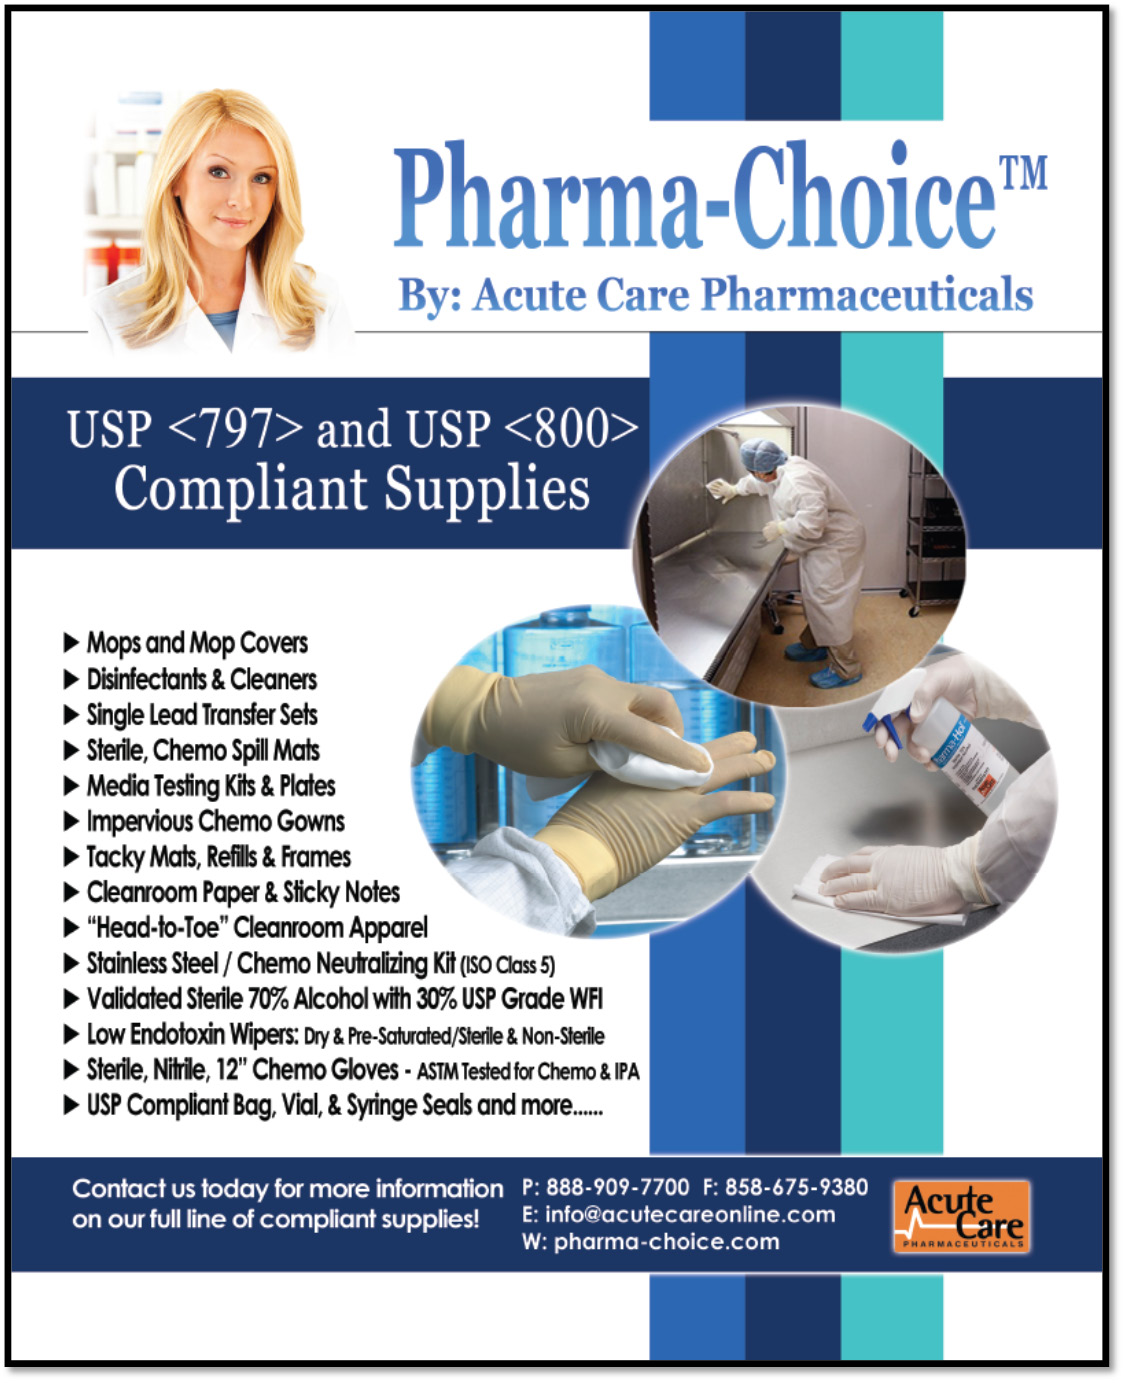 Pharma-Choice by Acute Care Pharmaceuticals